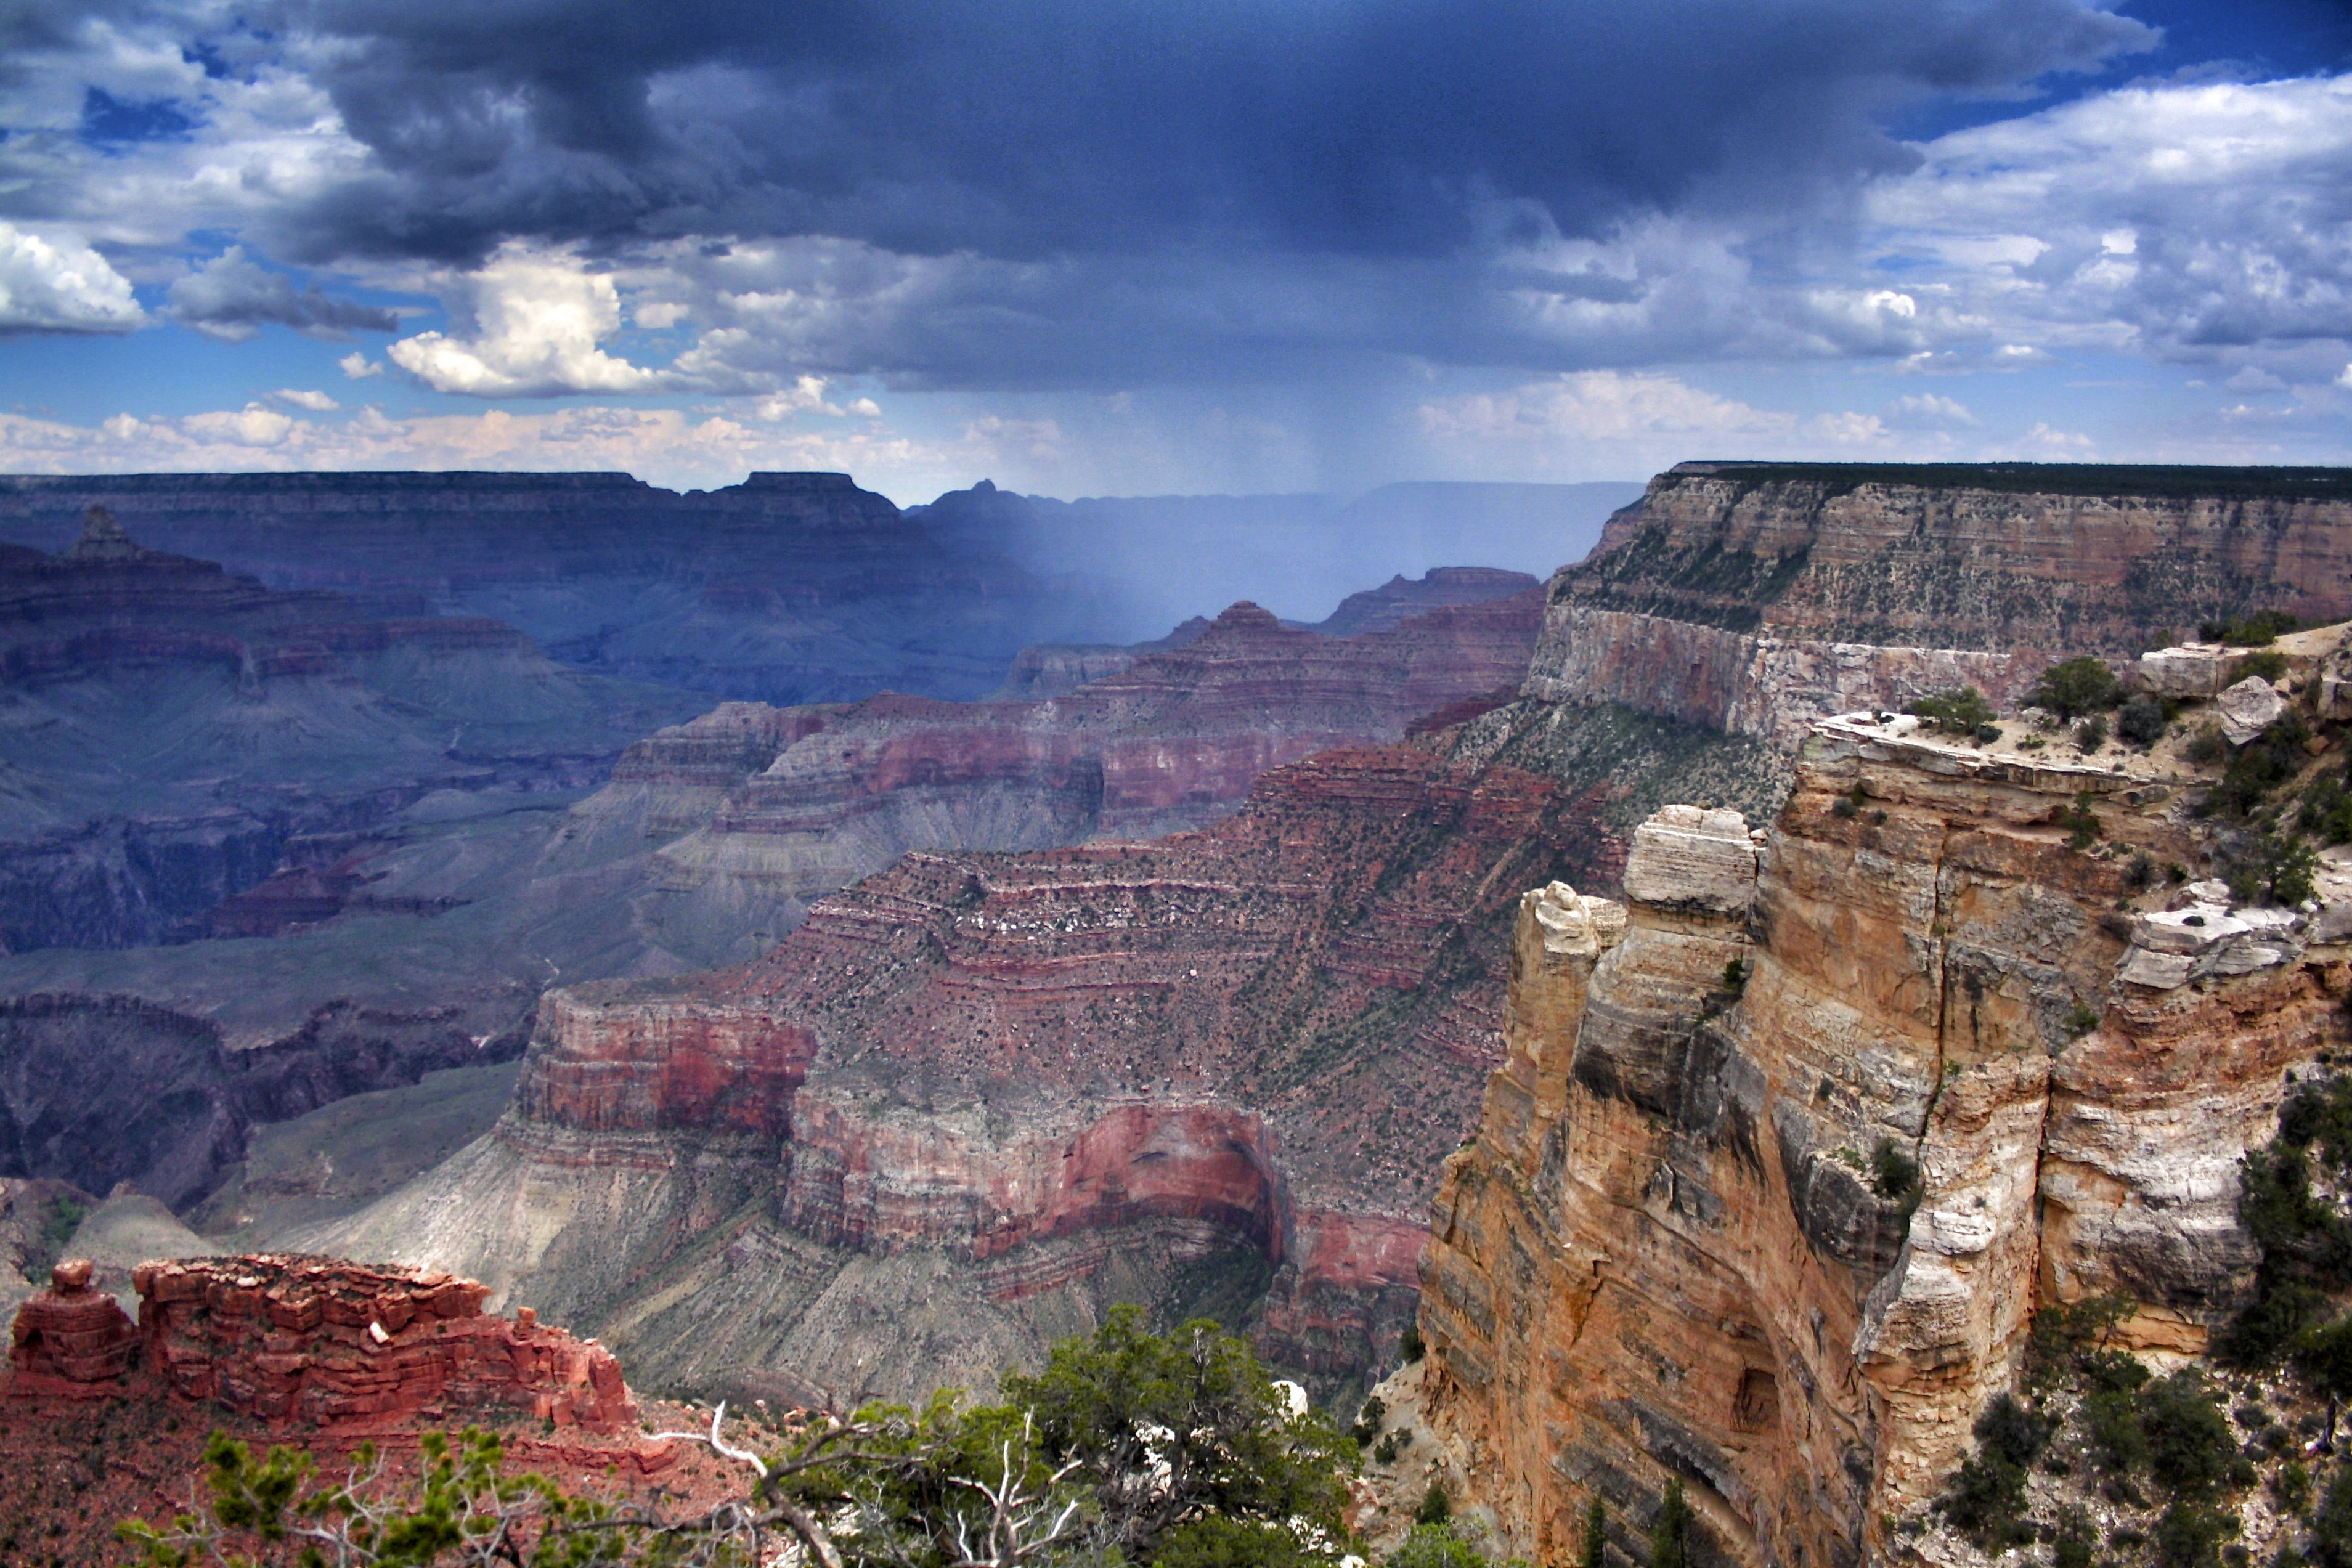 Landscape And Rain Clouds At Grand Canyon National Park Arizona Image